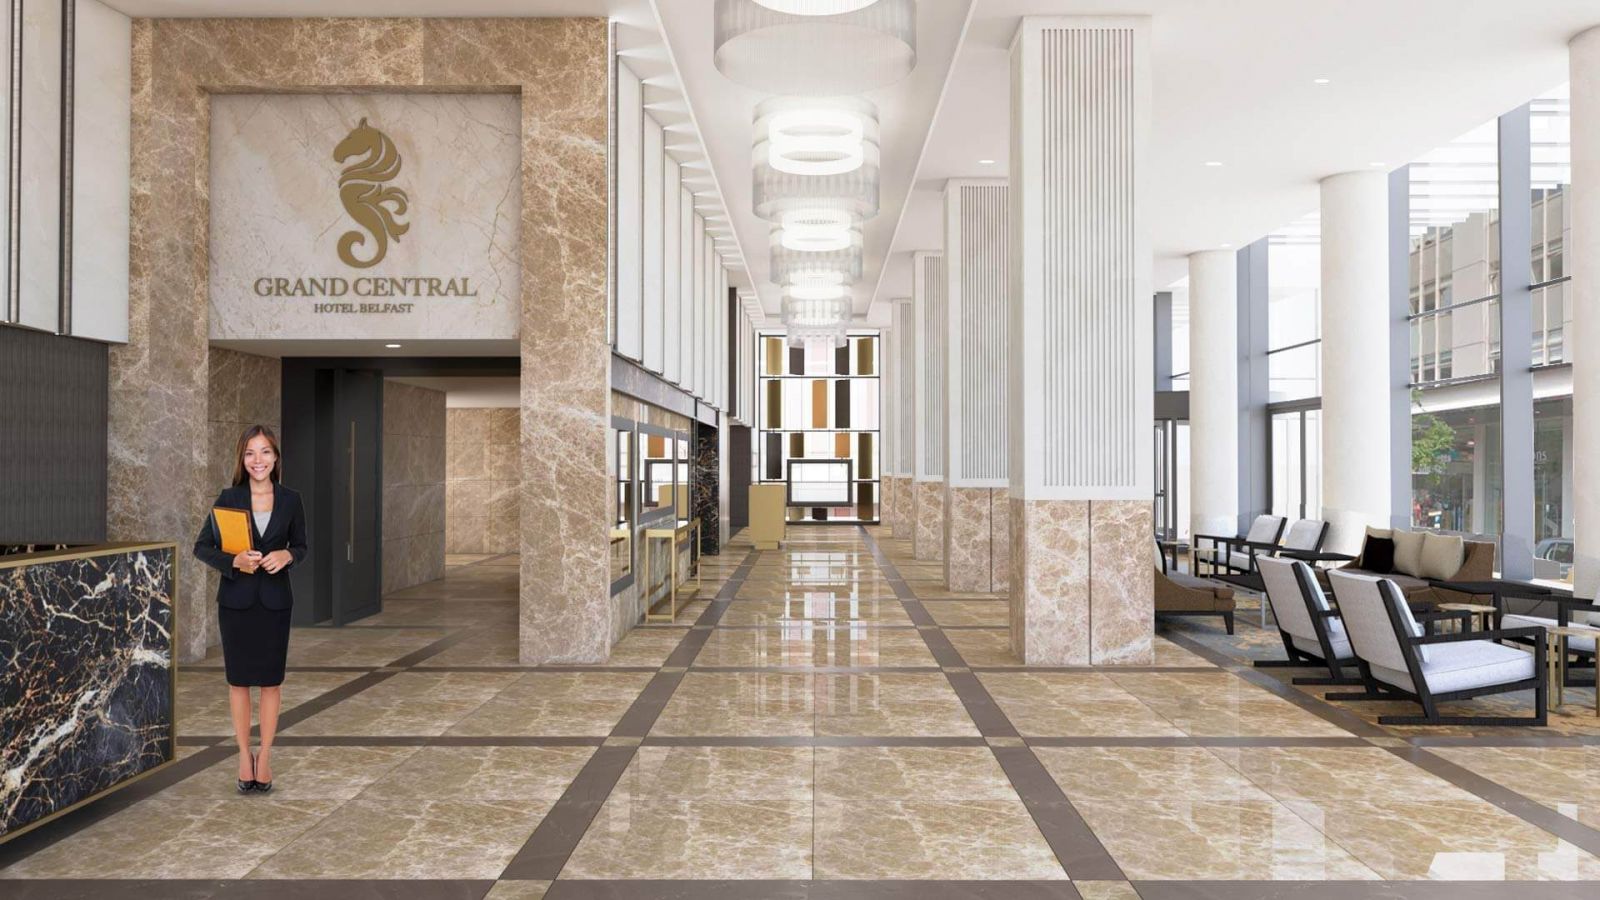 Grand Central Hotel Belfast